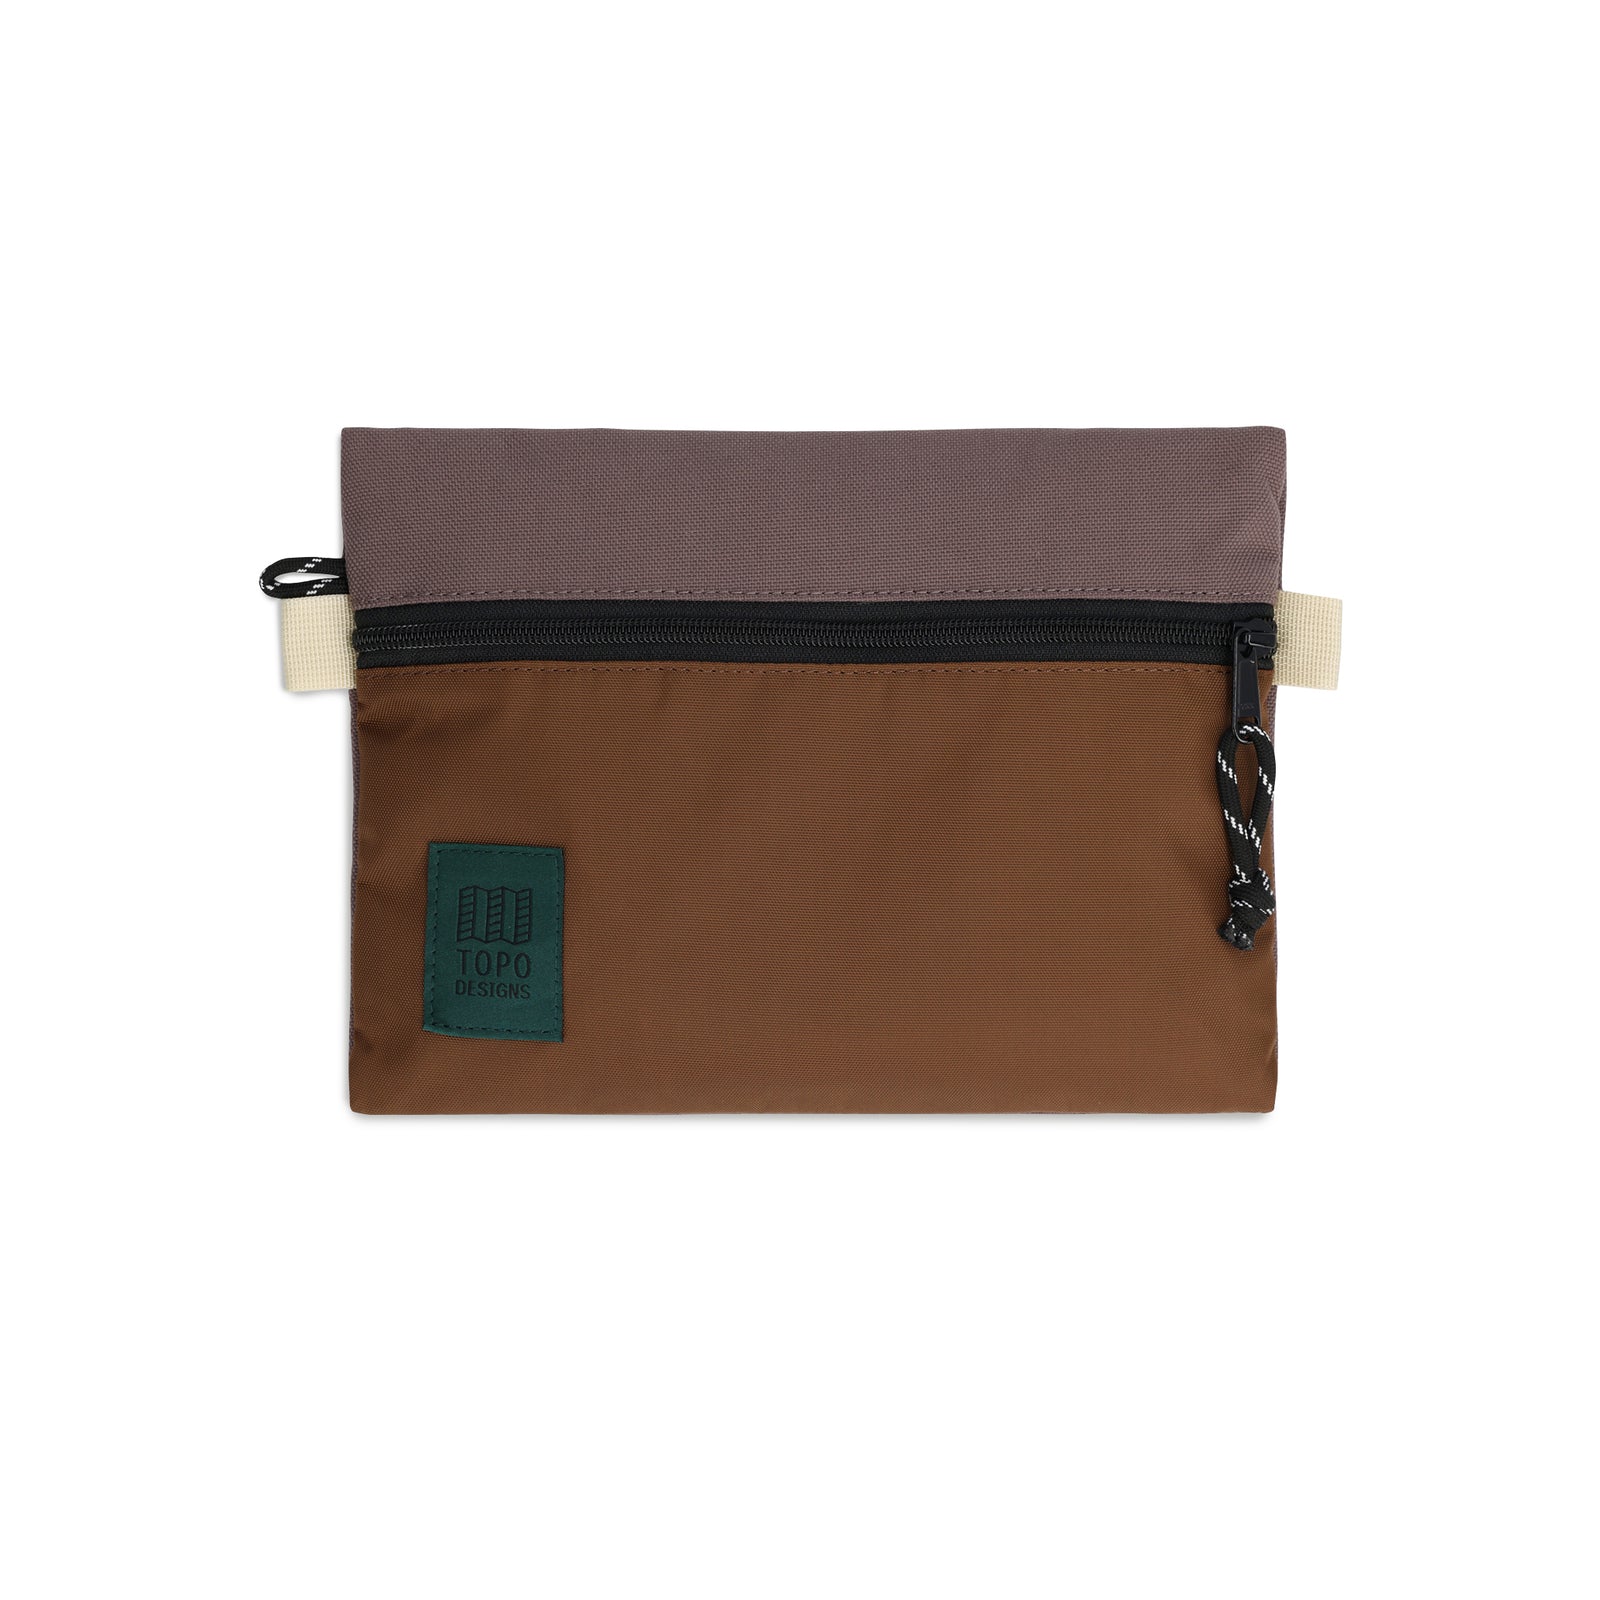 Topo Designs Accessory Bag in "Medium" "Peppercorn / Cocoa - Recycled"